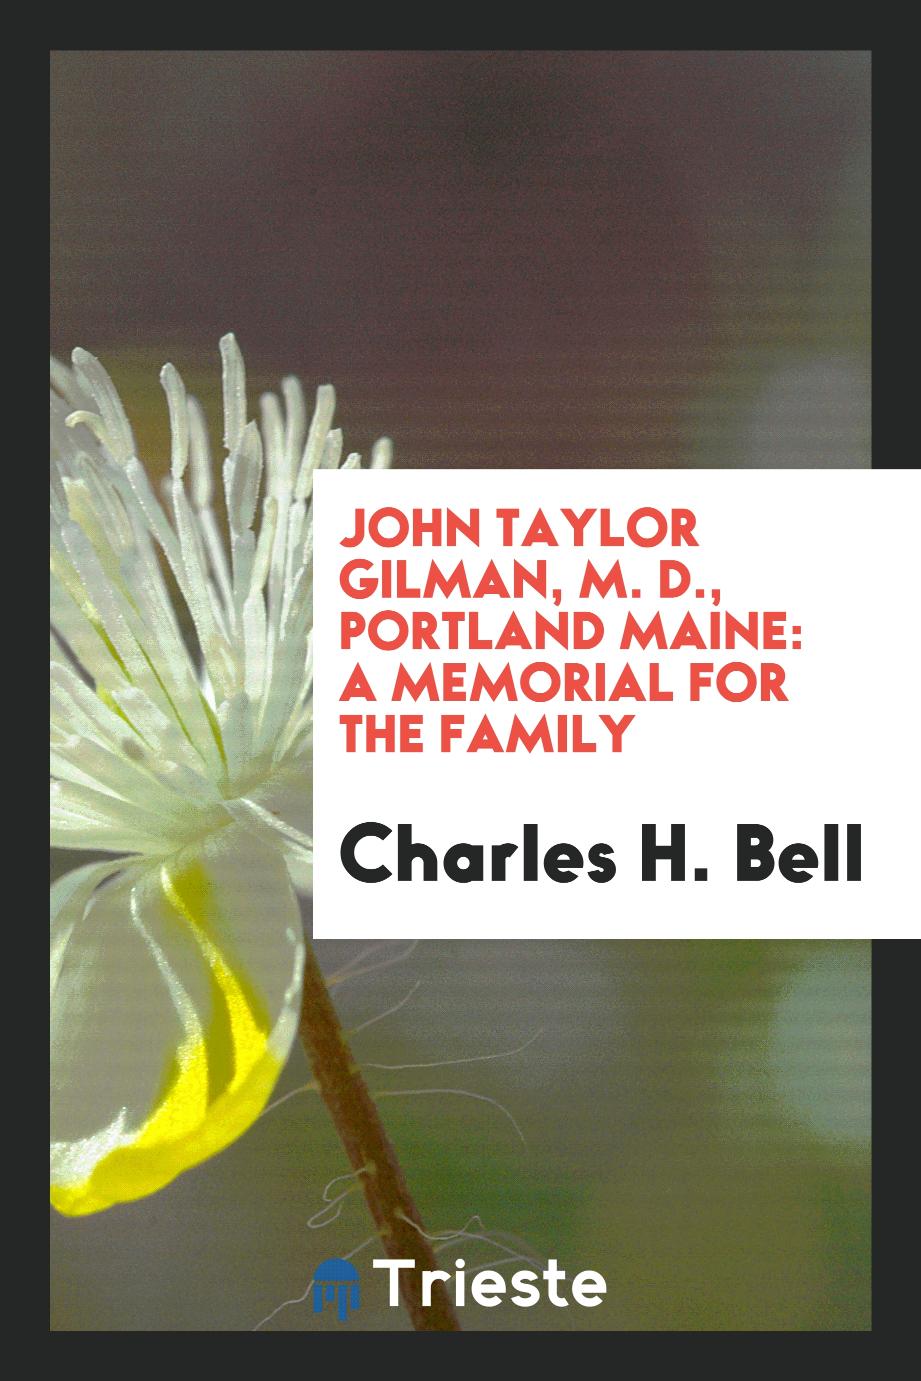 John Taylor Gilman, M. D., Portland Maine: A Memorial for the Family